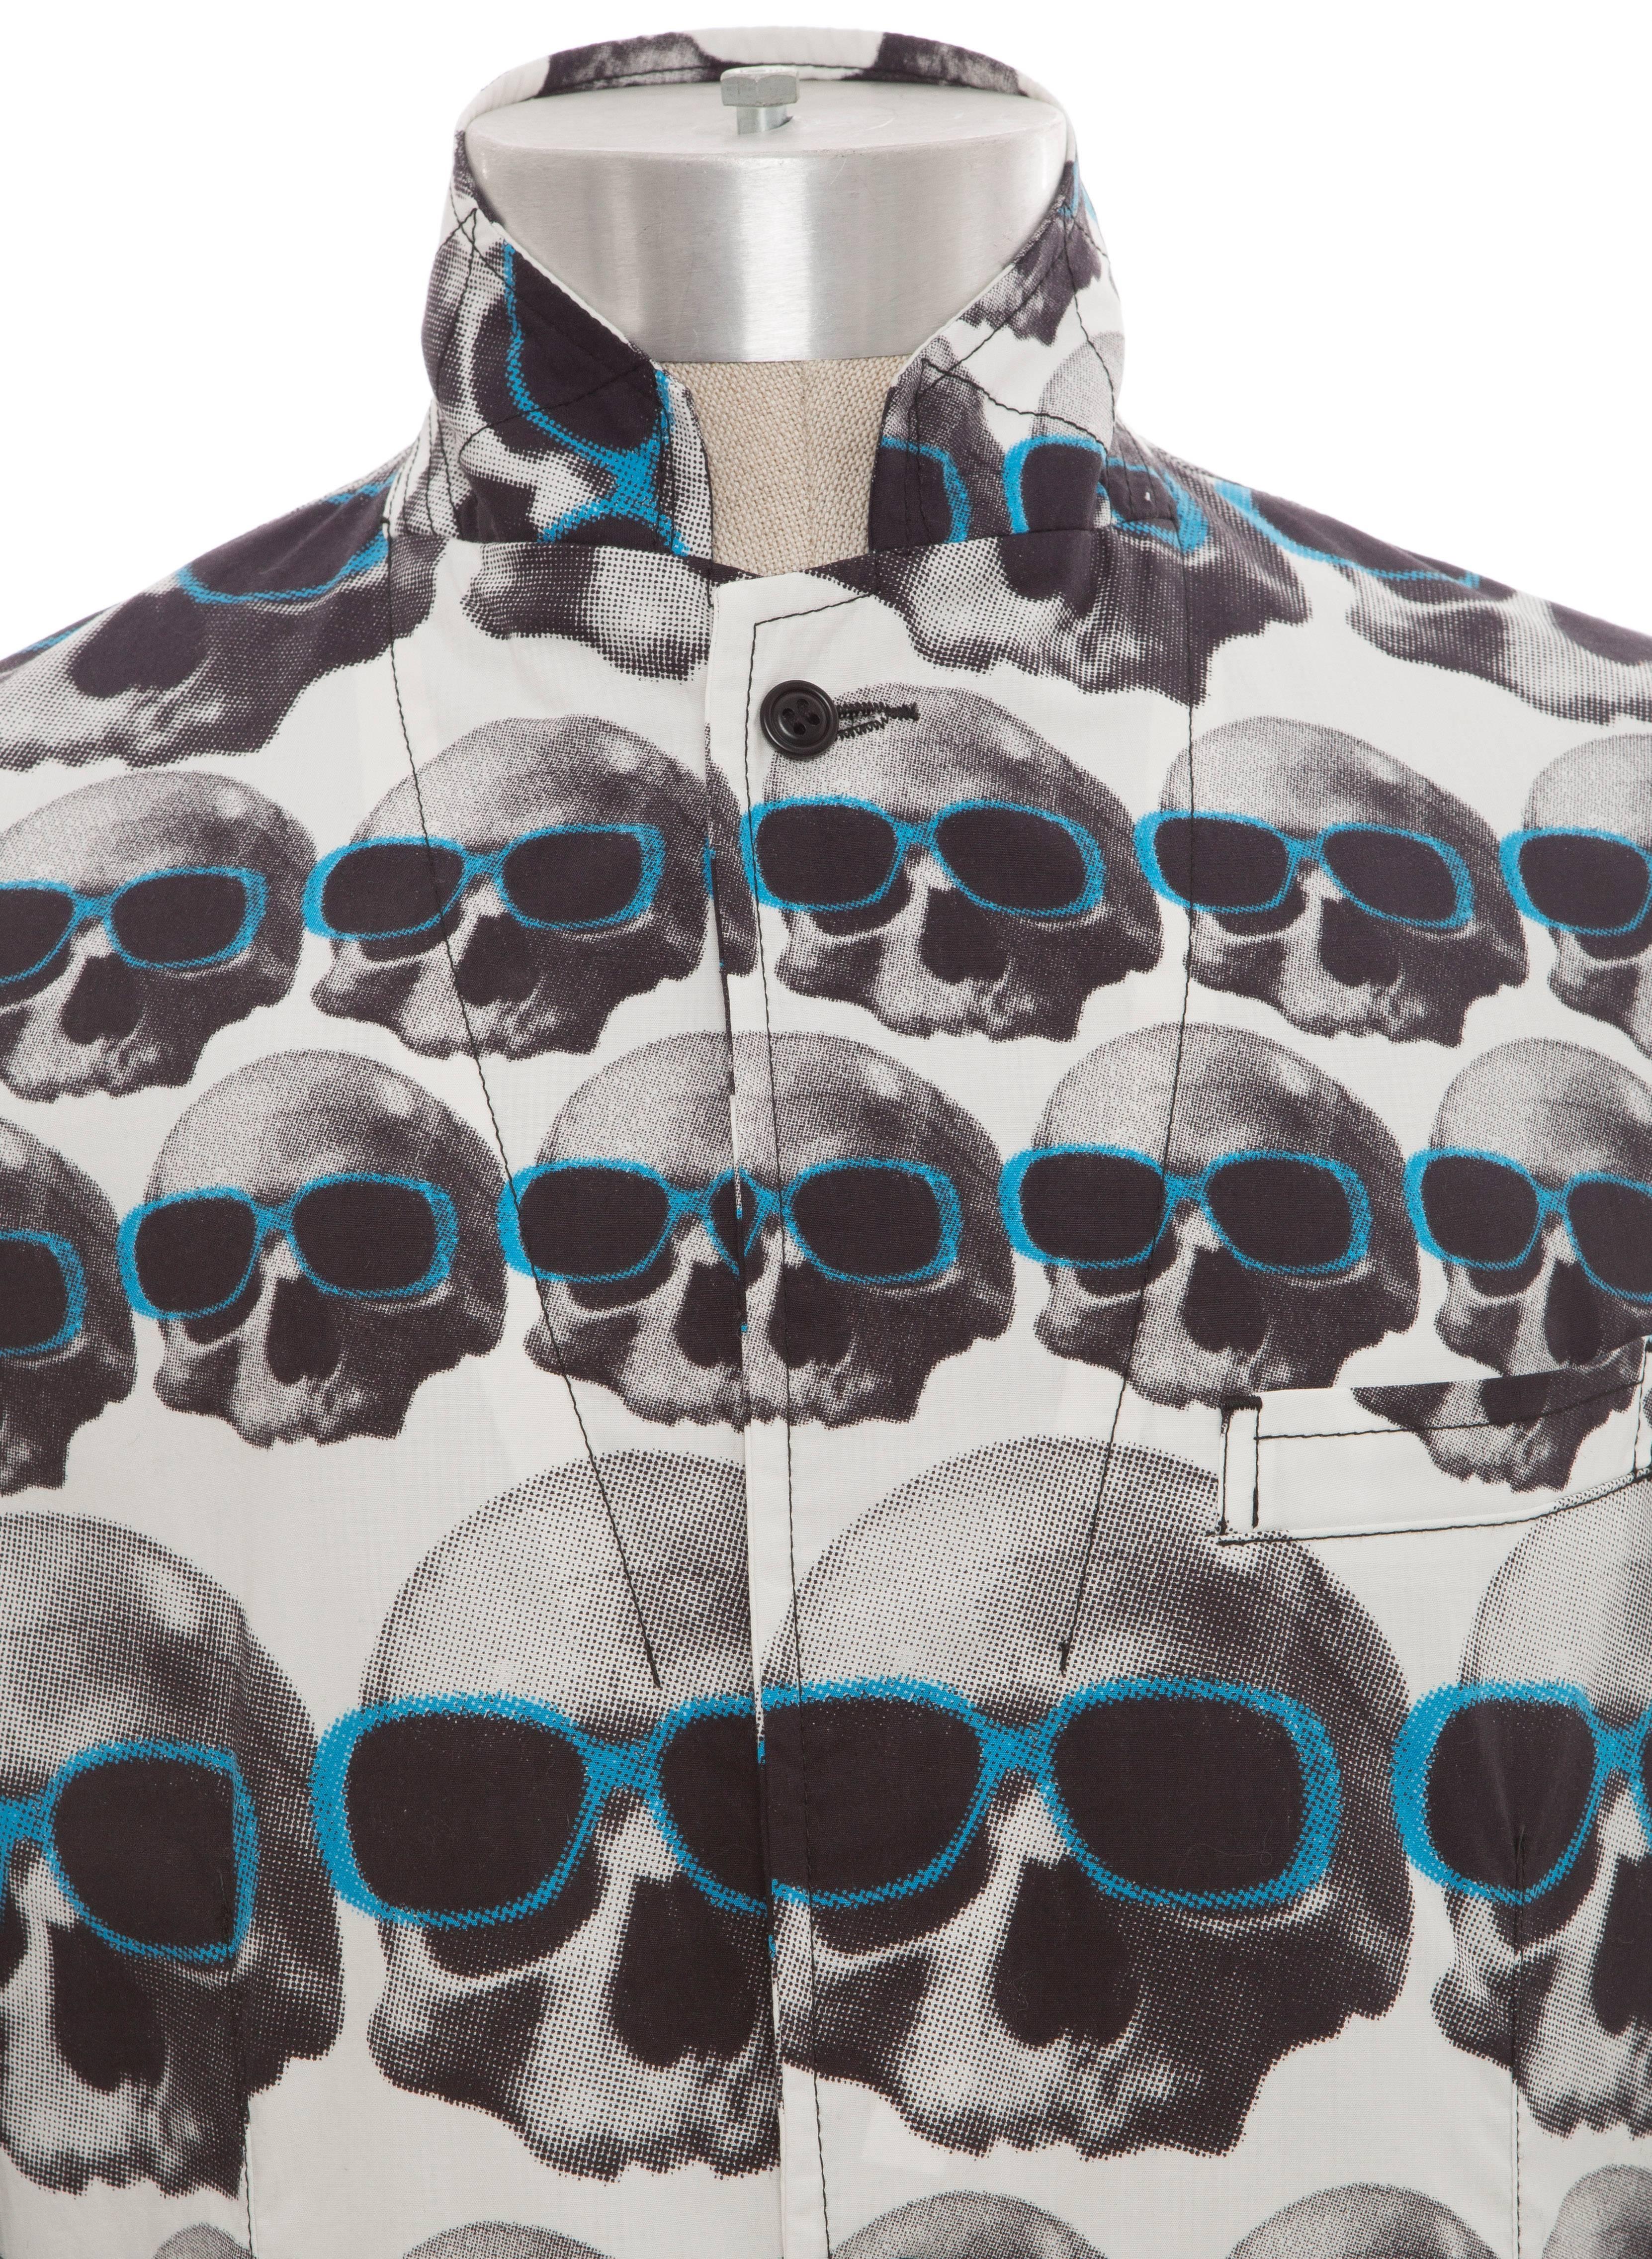 Comme Des Garcons Homme Plus Men's Jacket, Skull Of Life Collection, Spring 2011 2